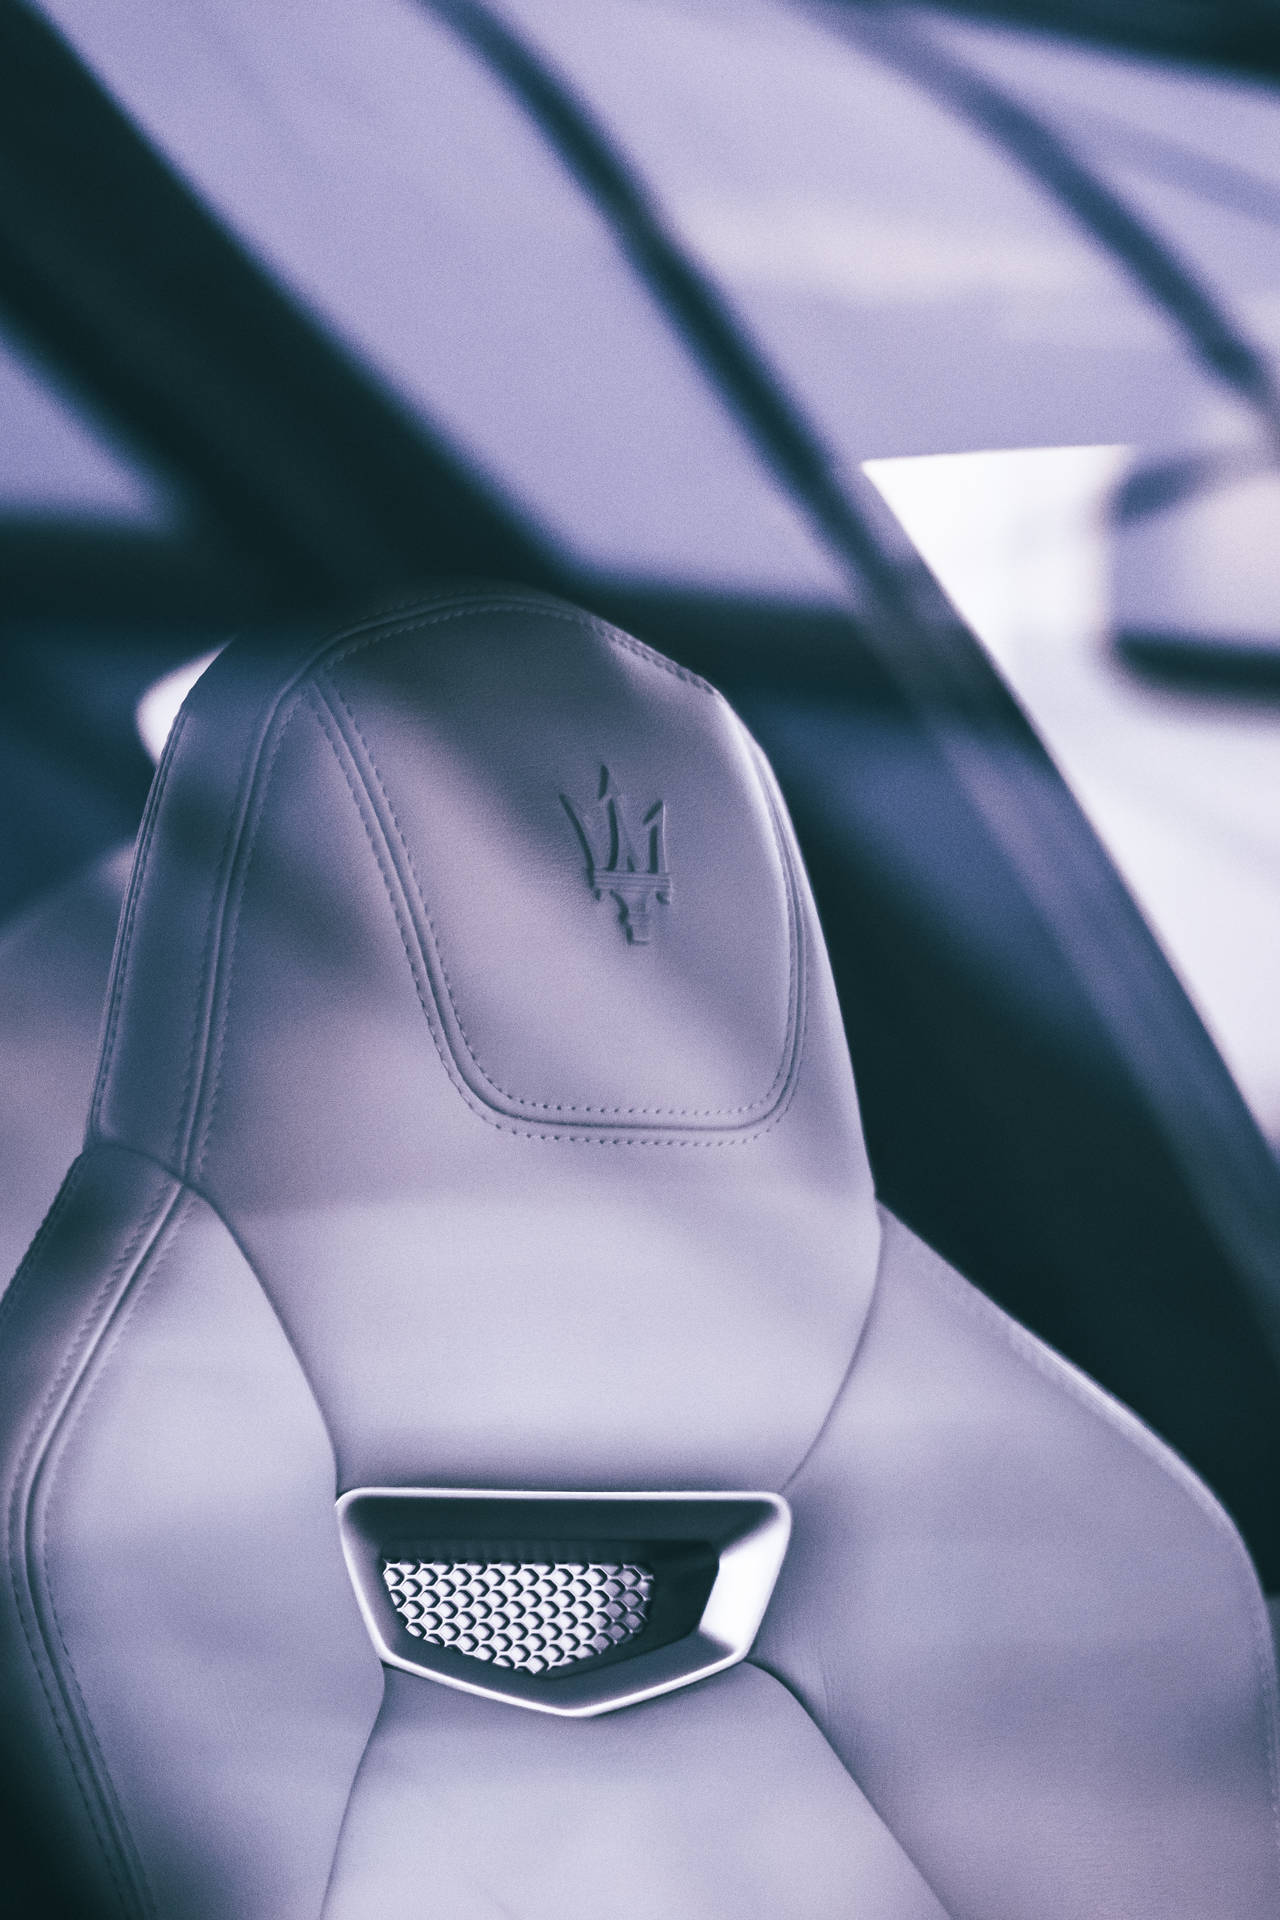 Maserati Car Seat Background